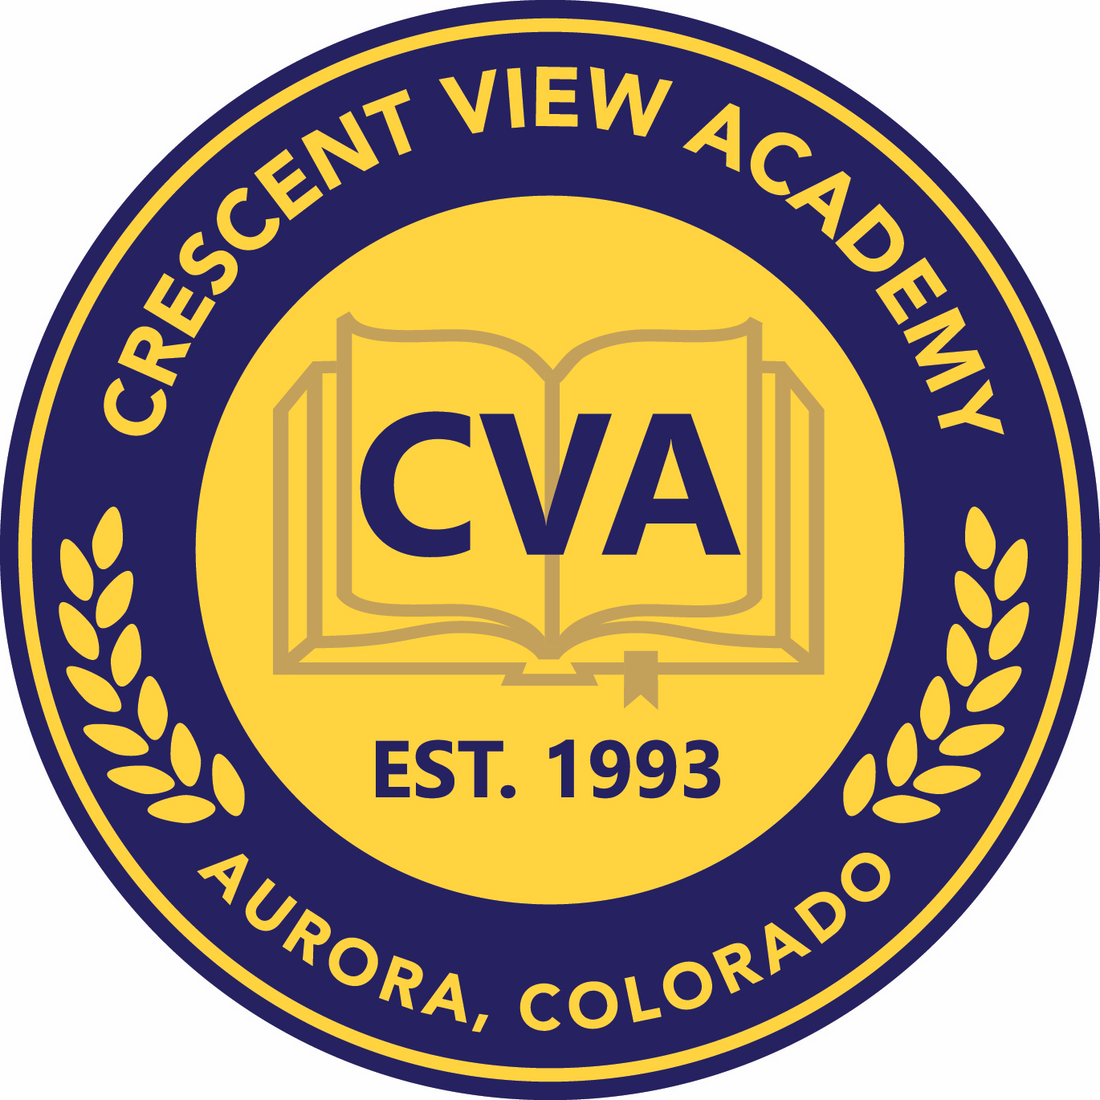  Crescent View Academy